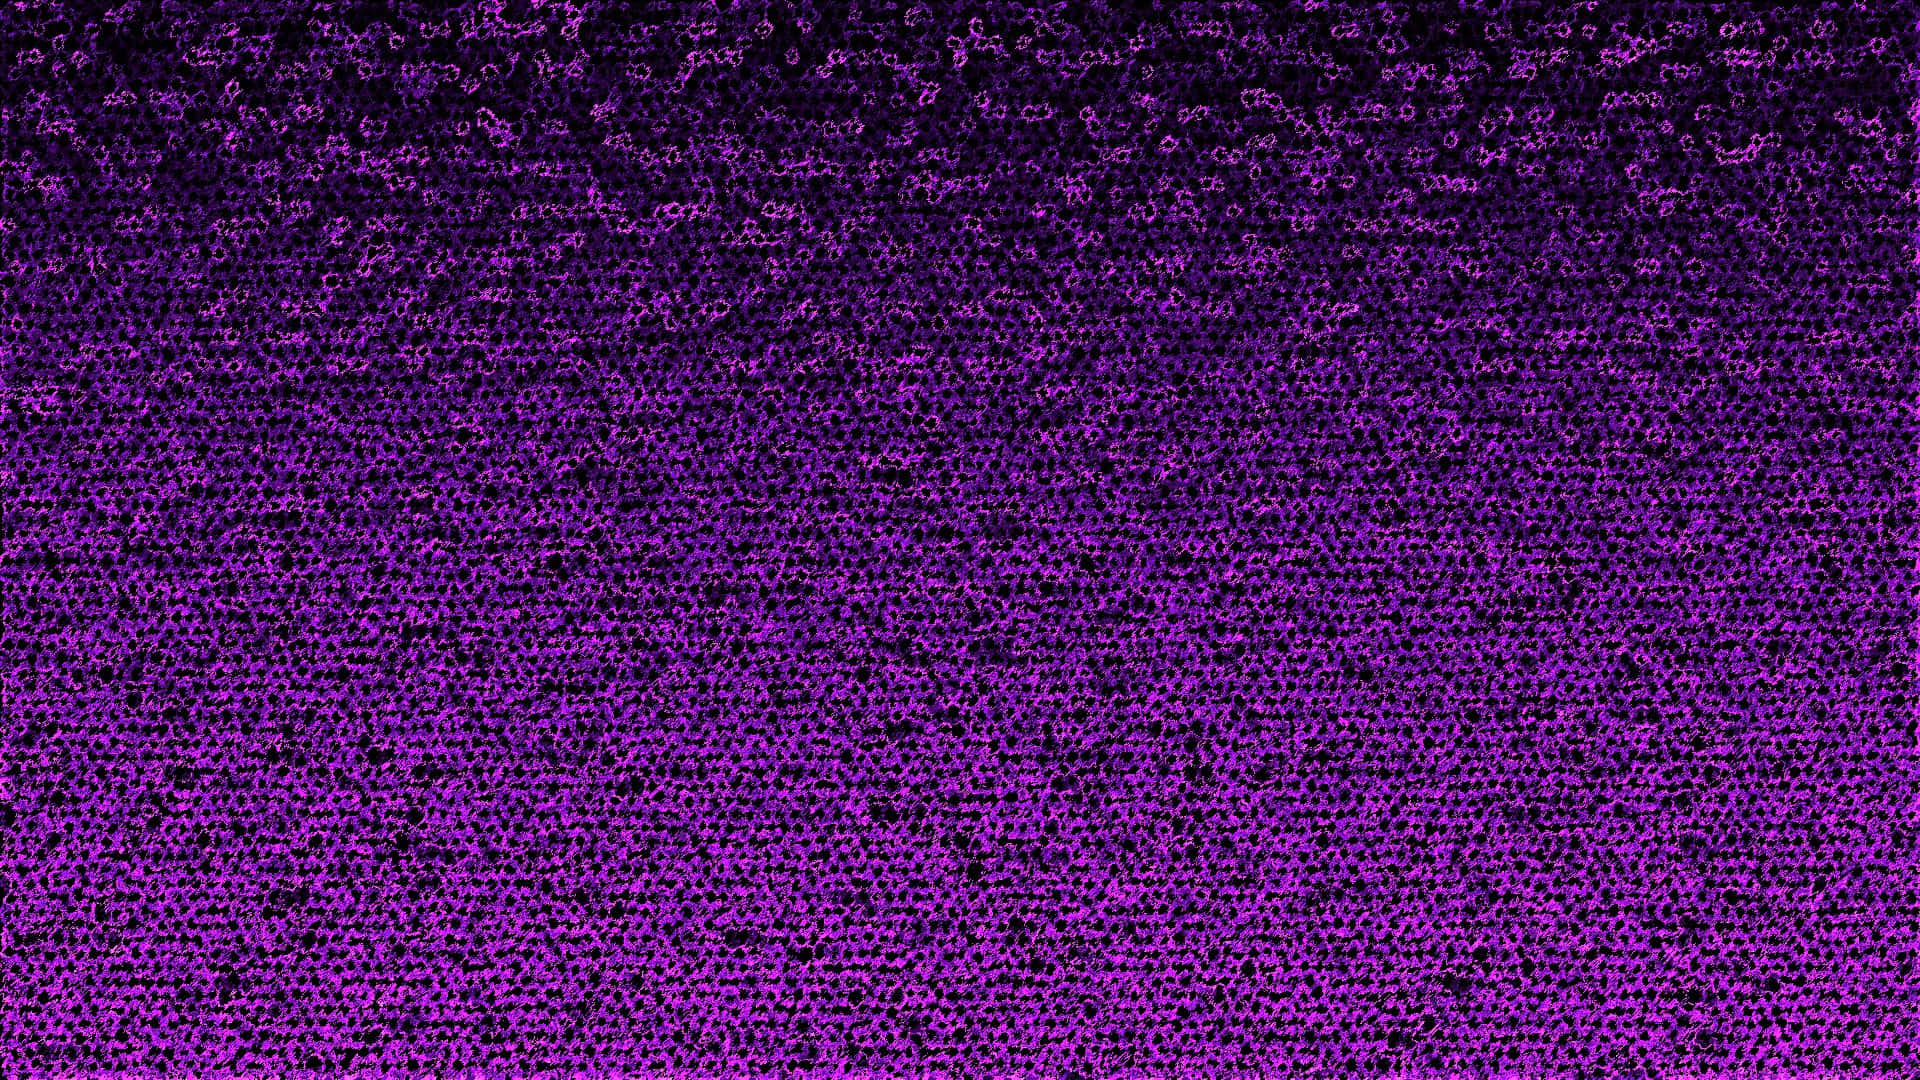 Amazingly vibrant purple textured background